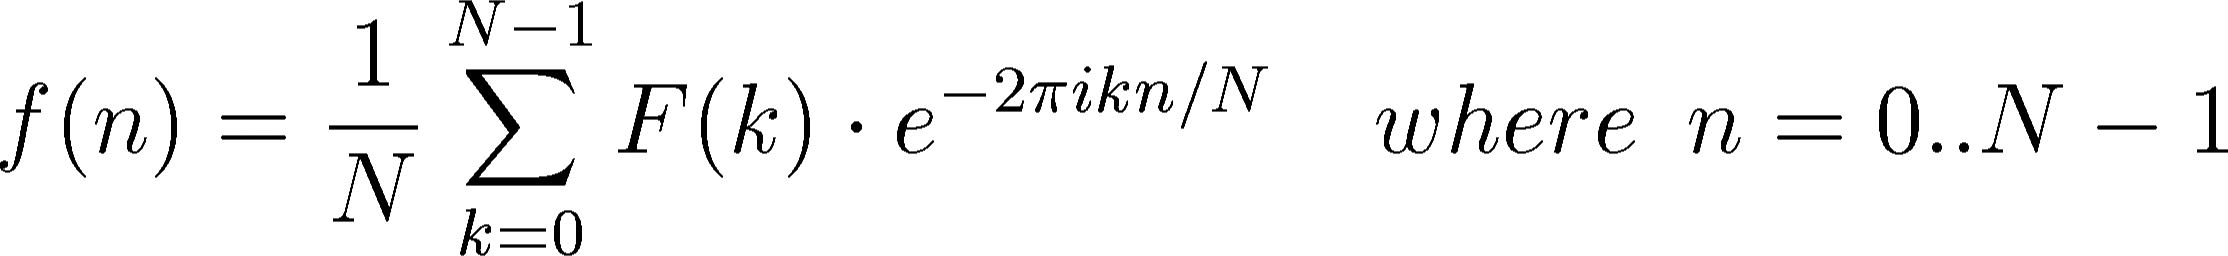 \begin{displaymath}
f(n)=\frac{1}{N}\sum_{k=0}^{N-1}F(k)\cdot e^{-2\pi ikn/N}\quad
where\hspace{0.2cm}n=0..N-1
\end{displaymath}